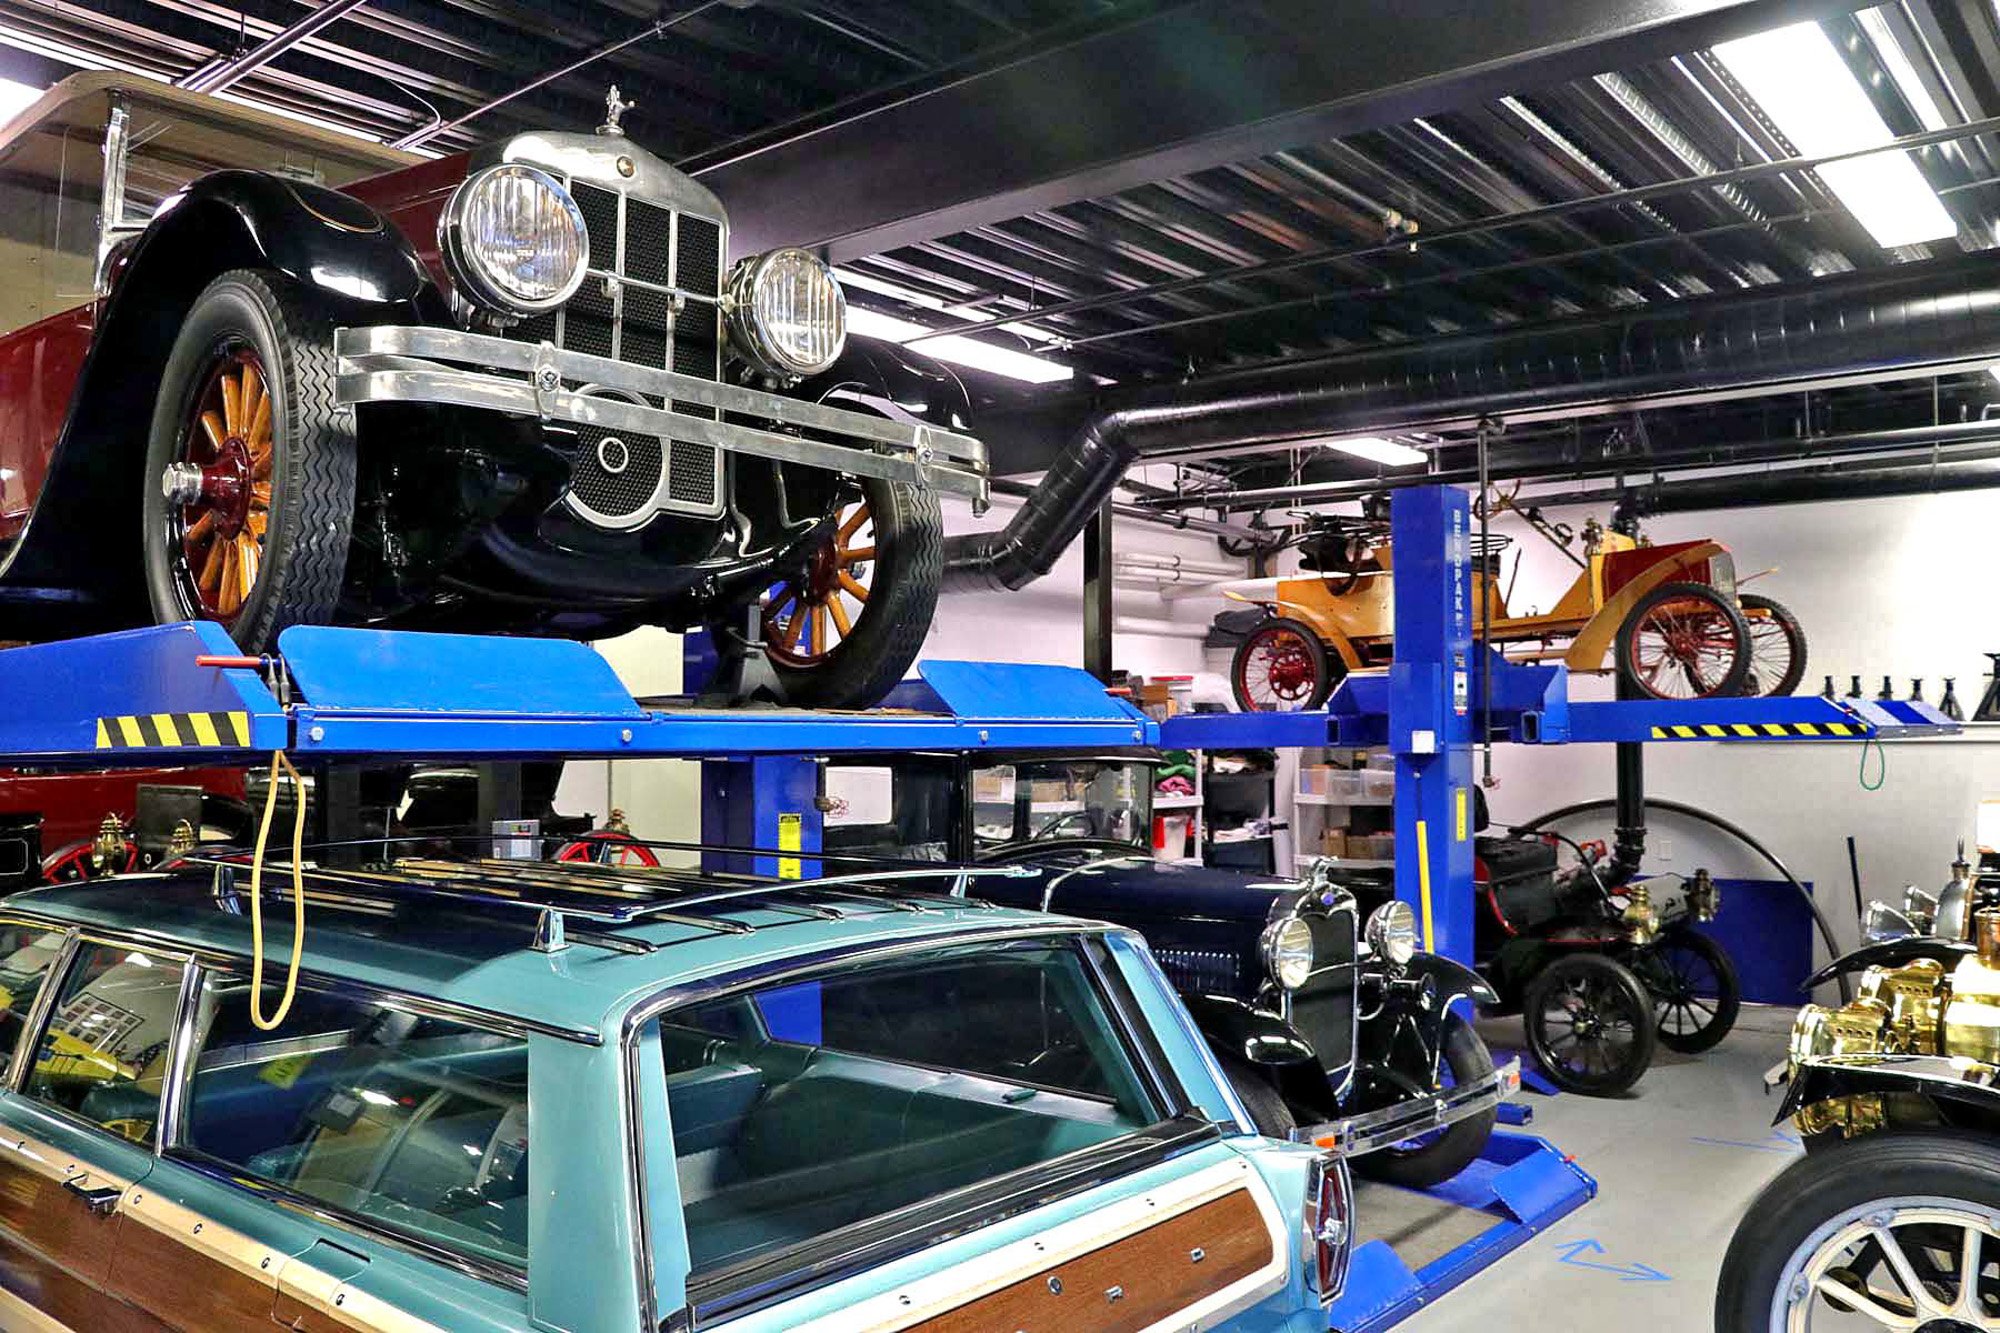 Heritage Auto Garage